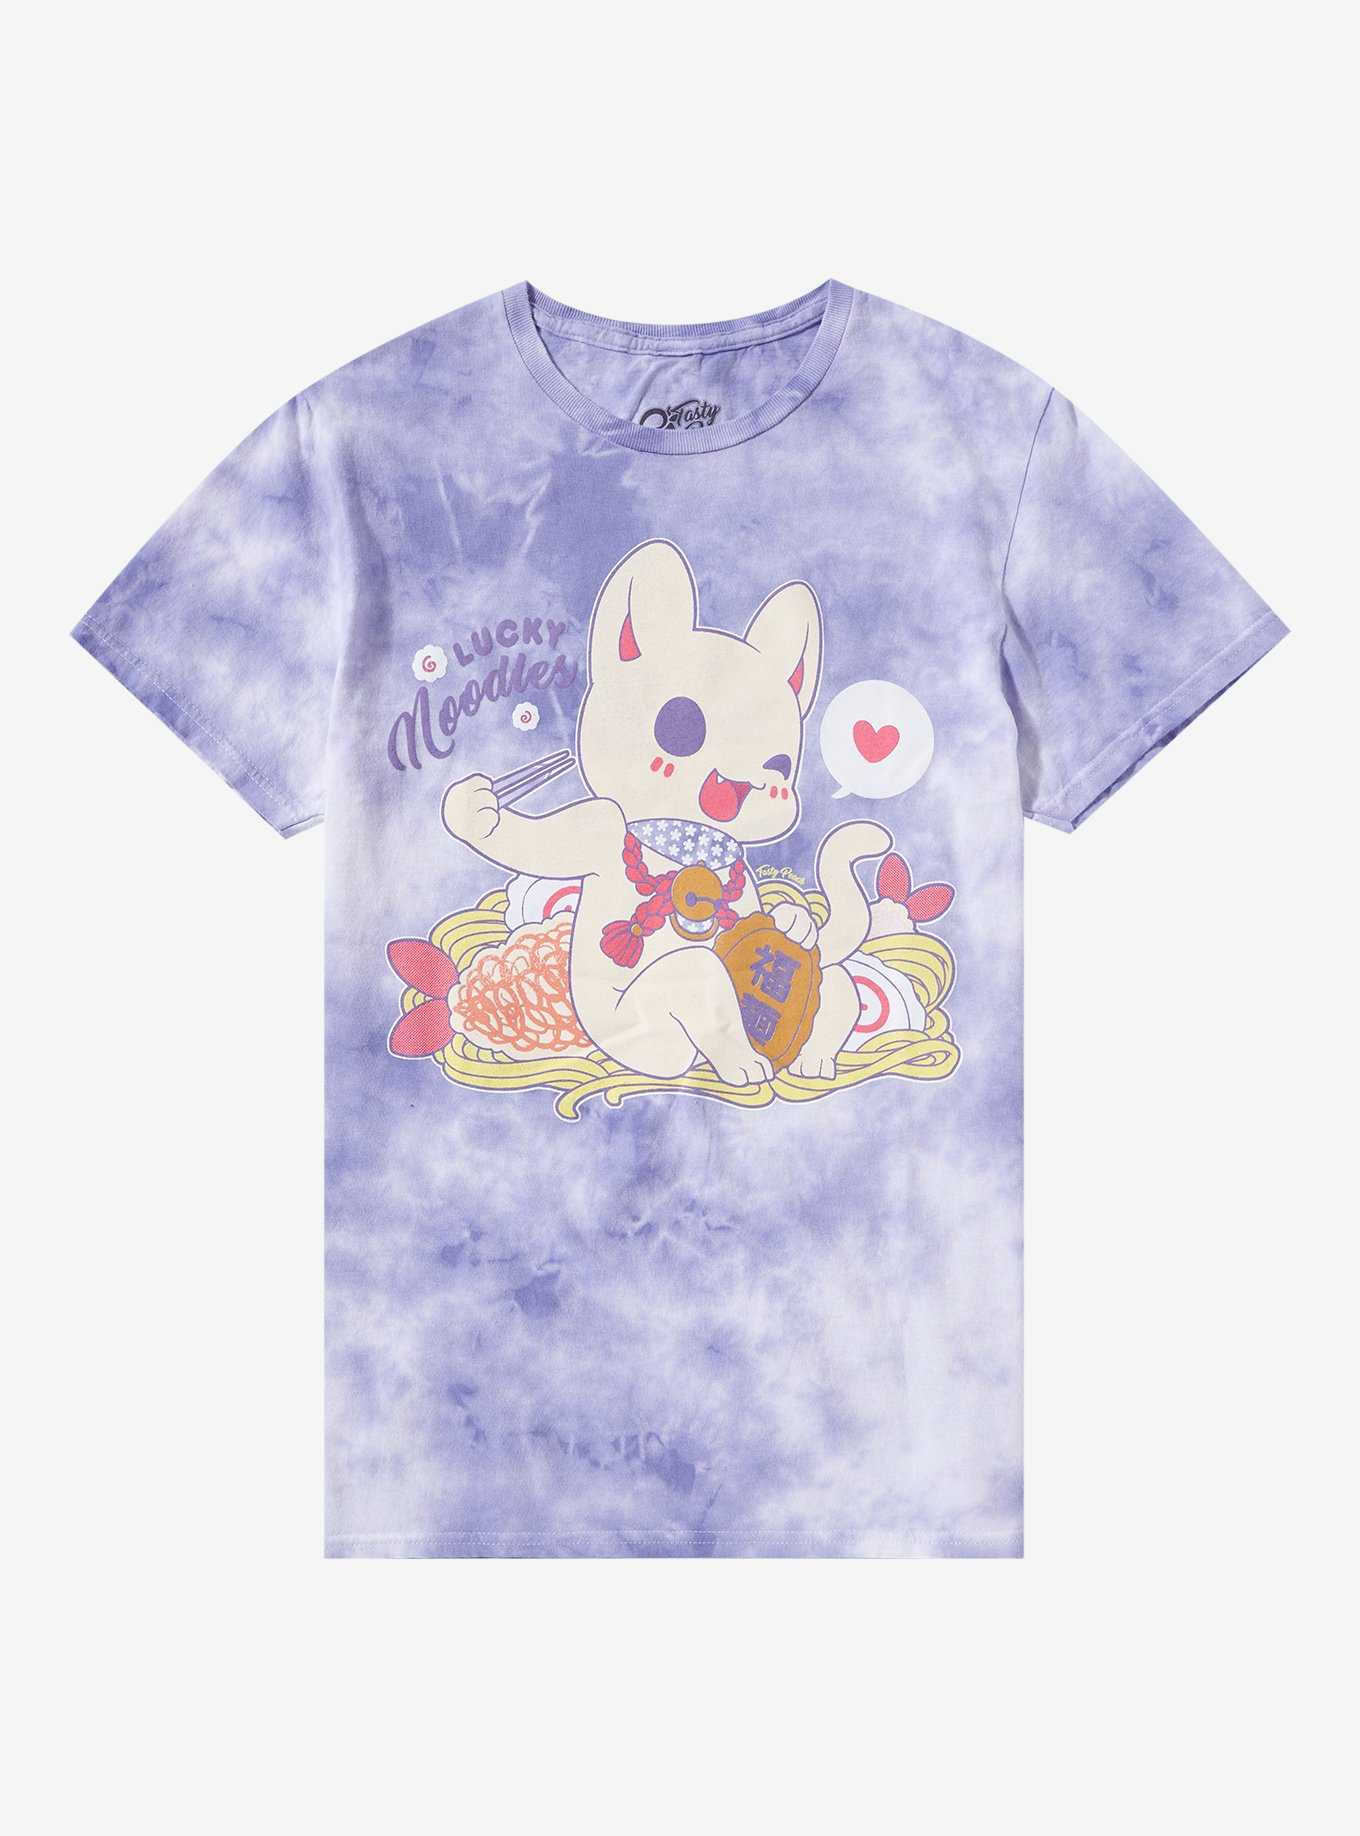 Tasty Peach Lucky Noodles Cat Tie-Dye Boyfriend Fit Girls T-Shirt, , hi-res